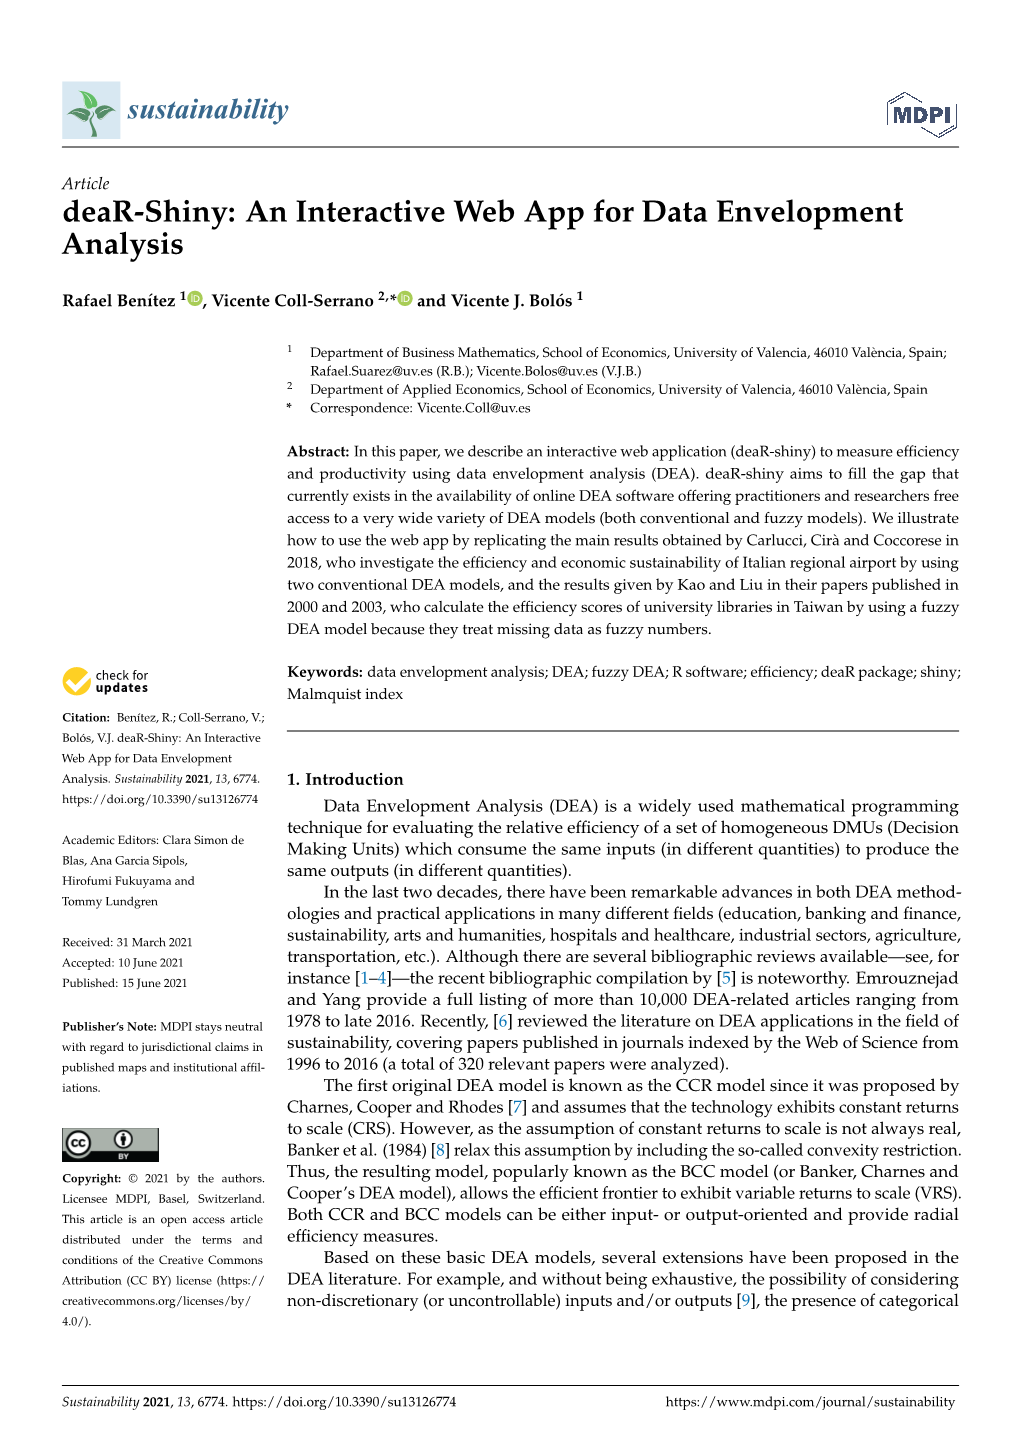 An Interactive Web App for Data Envelopment Analysis